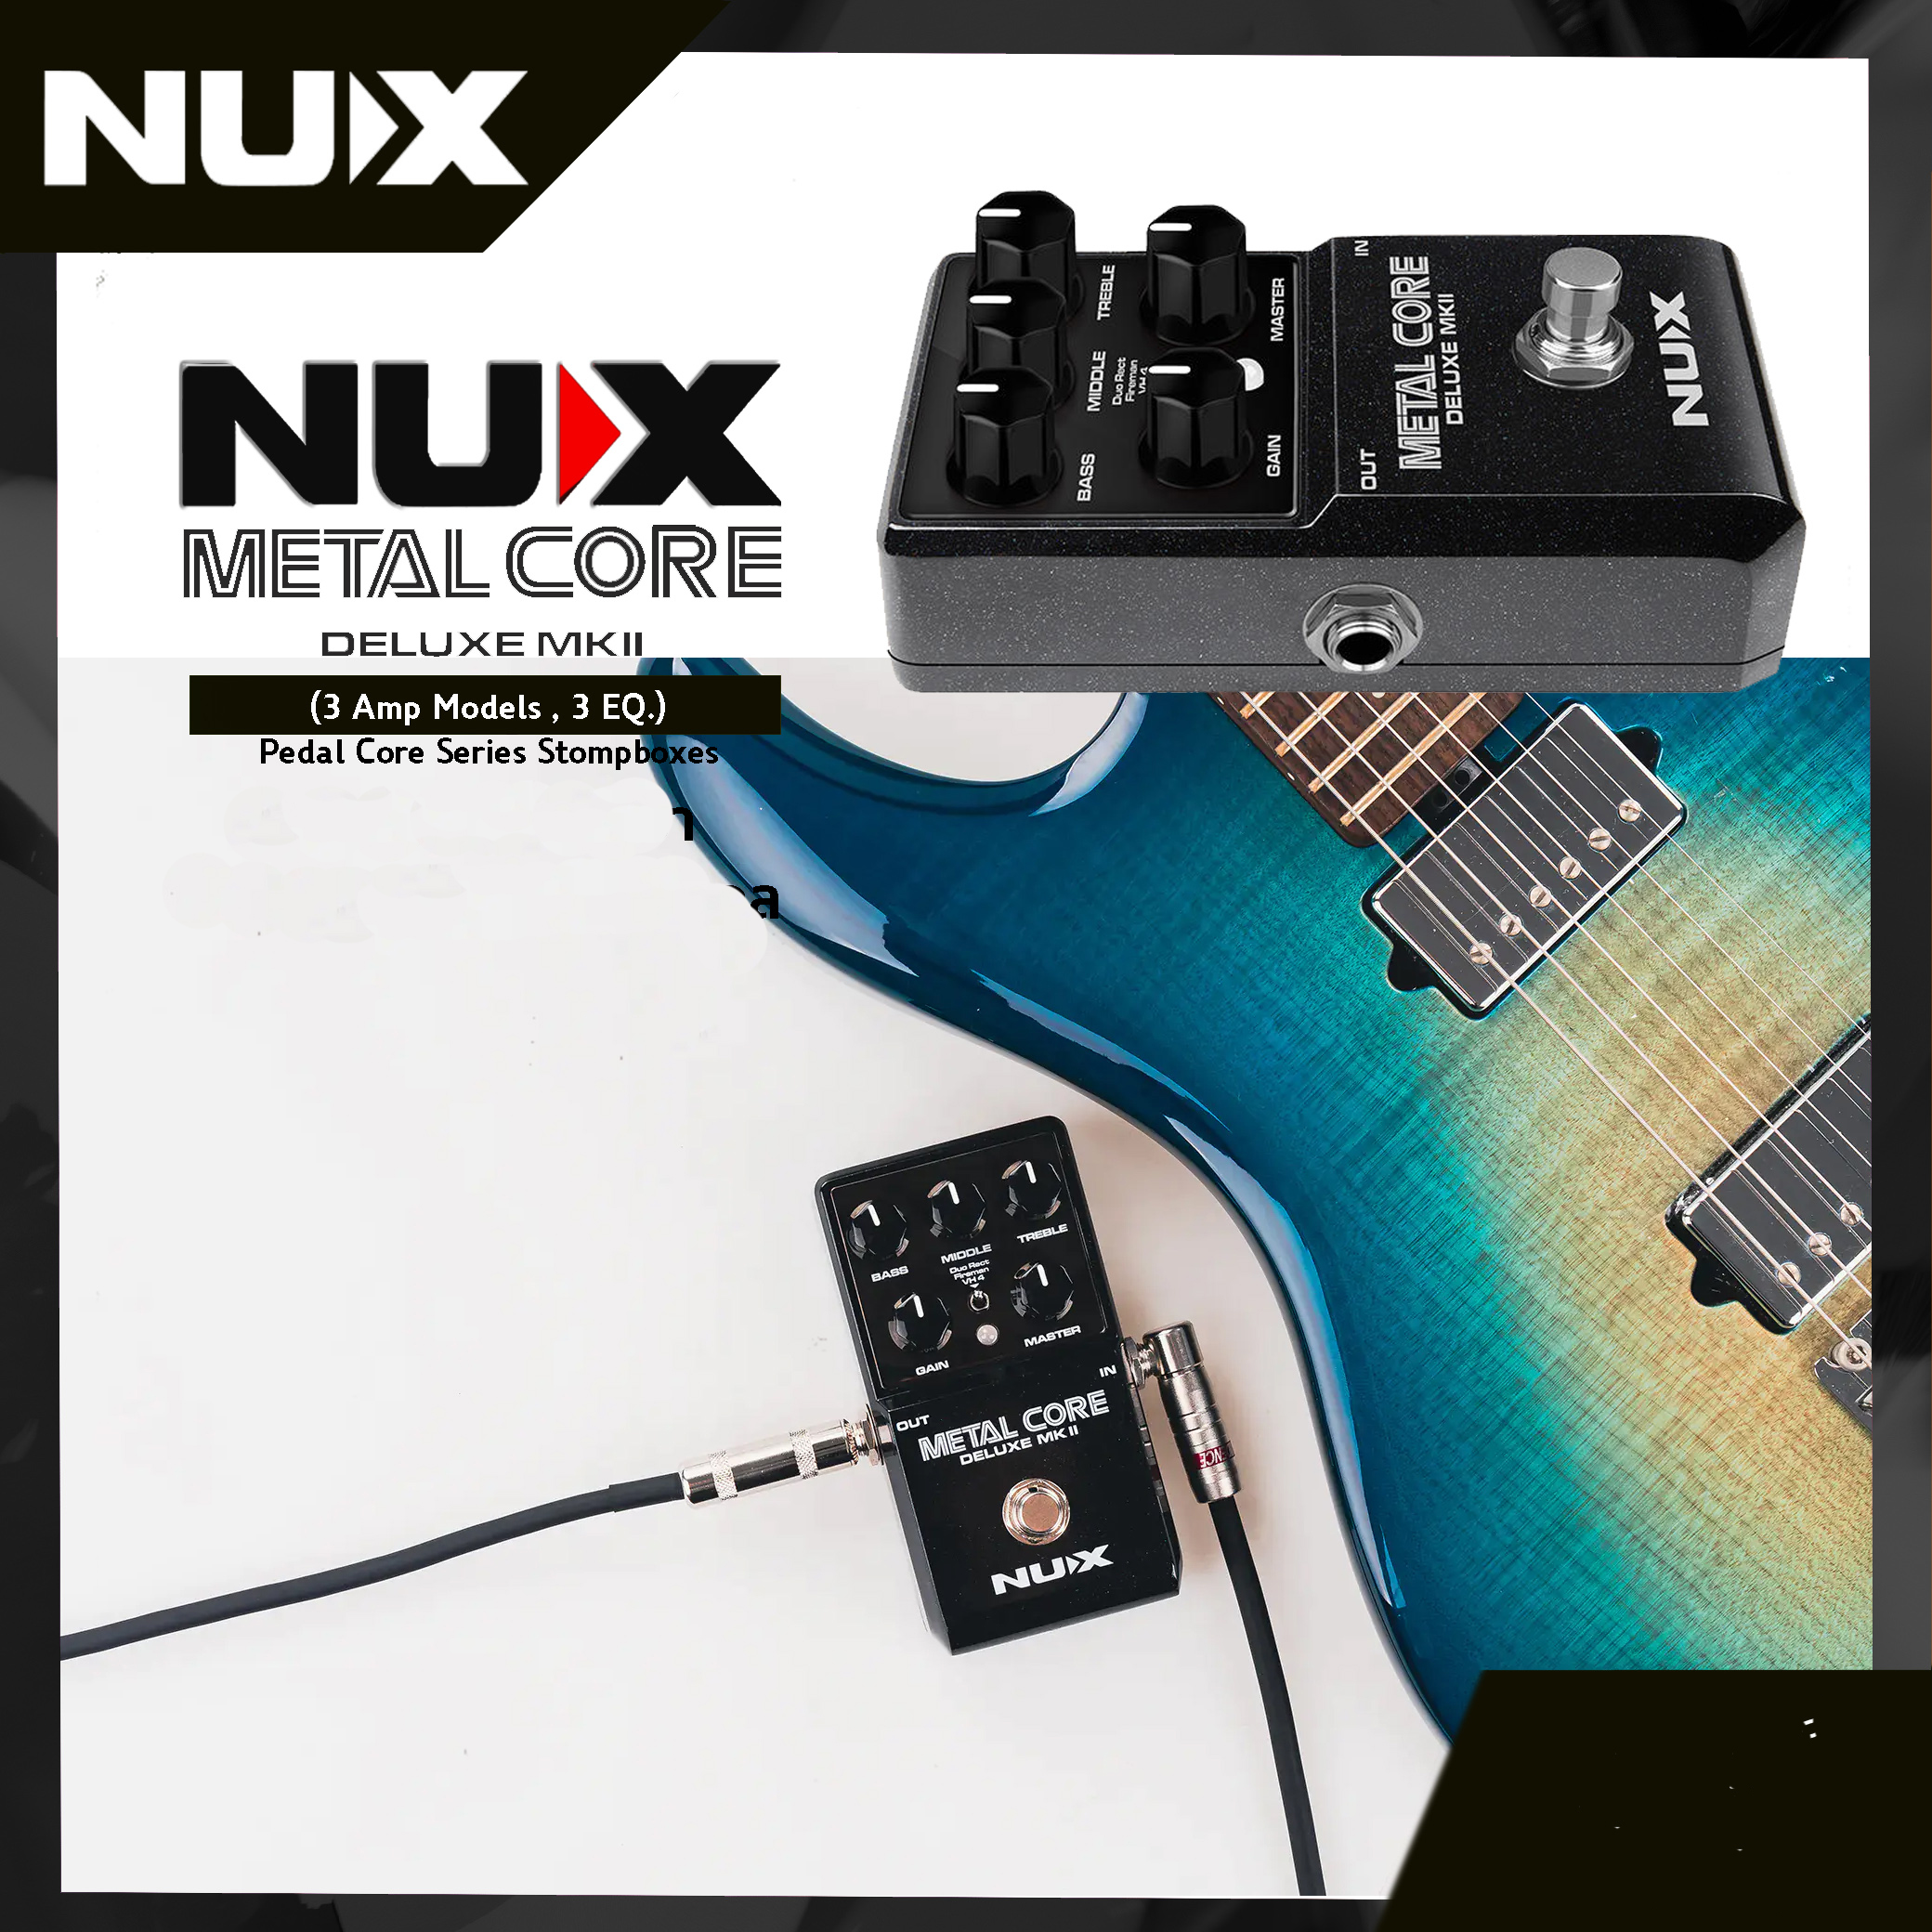 NUX Metal Core Deluxe MKII Hi Gain Distortion Guitar Effects Pedal - Black